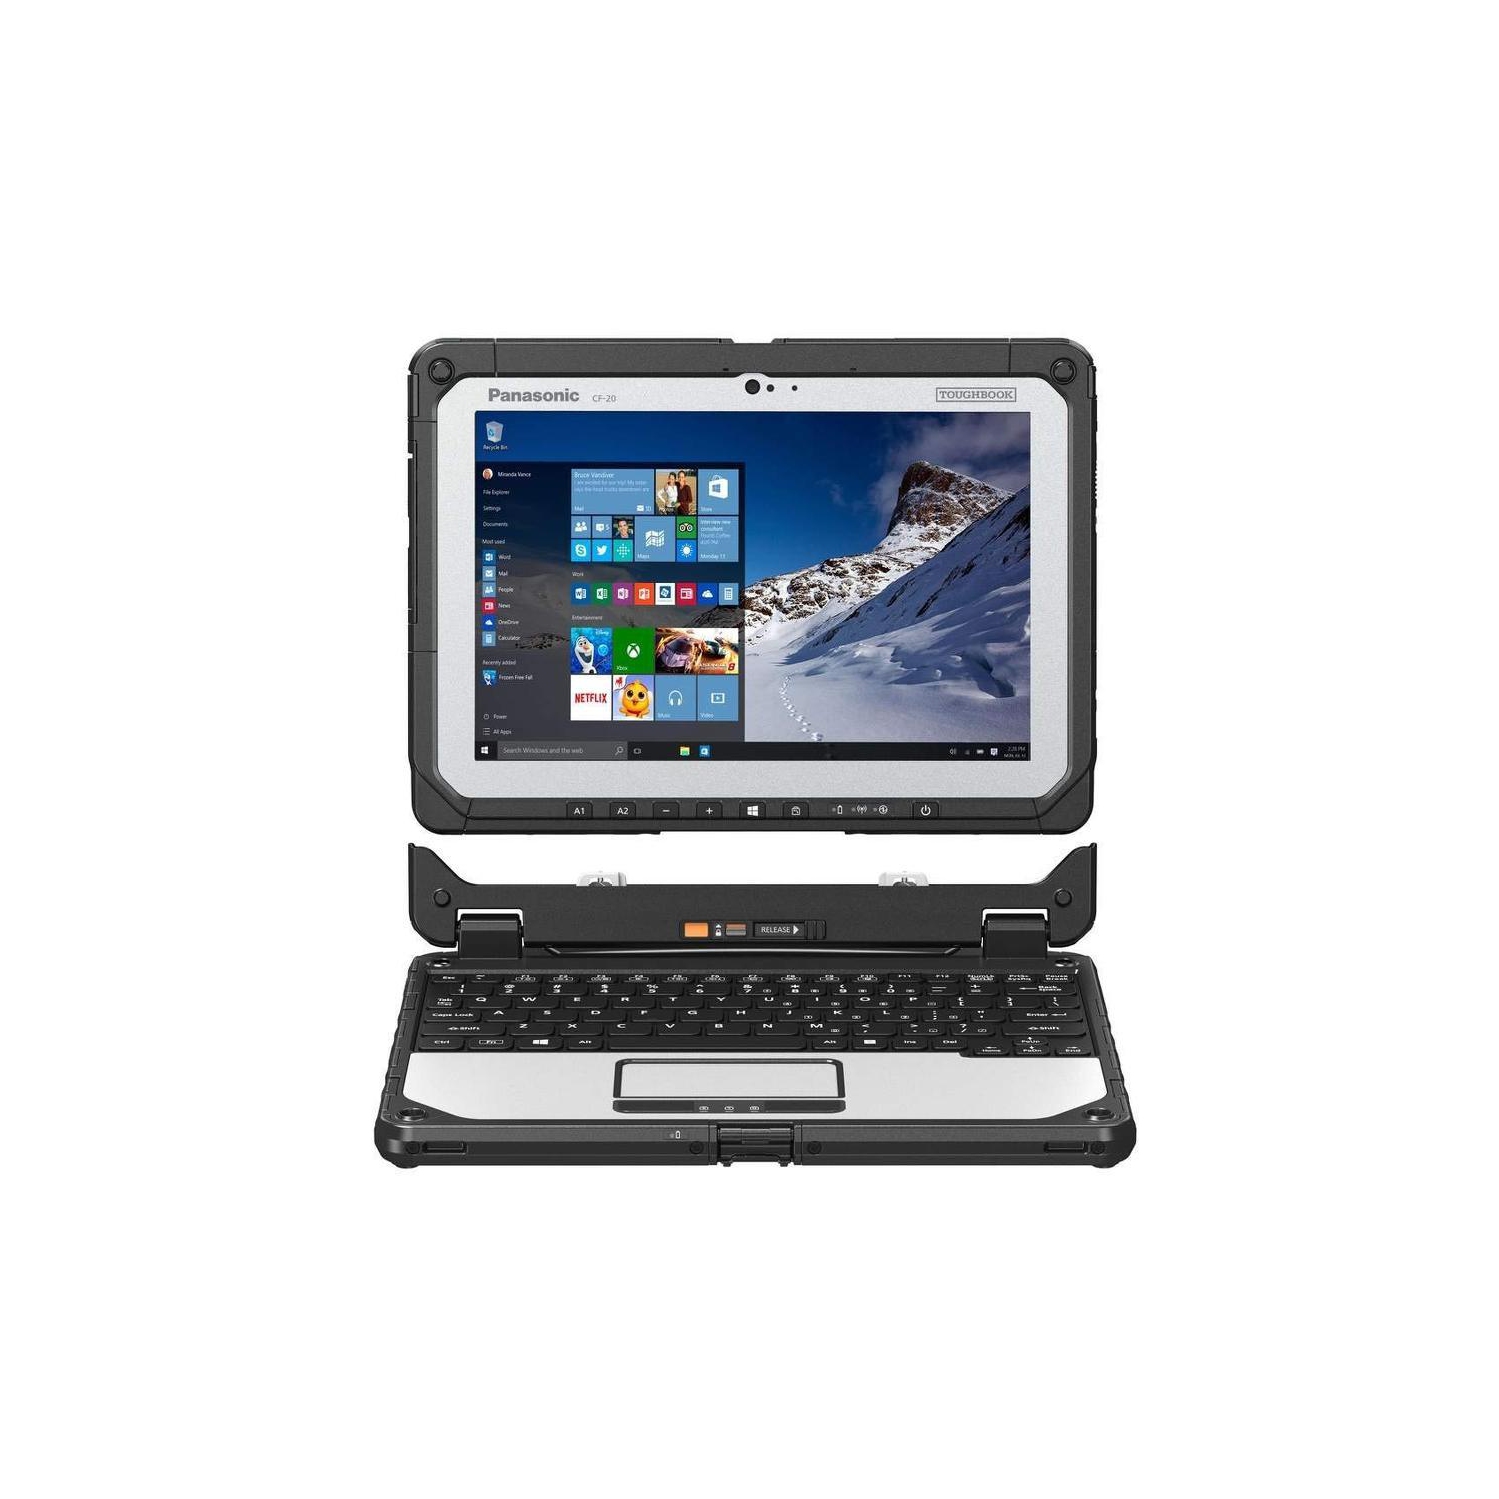 Refurbished (Good) - Panasonic Toughbook 20, CF-20 MK1, 10.1" Multi Touch, Intel Core m5-6Y57, 8GB DDR3L, 128GB SSD, Webcam, Rear Camera, Backlit Keyboard, Win 10 Pro